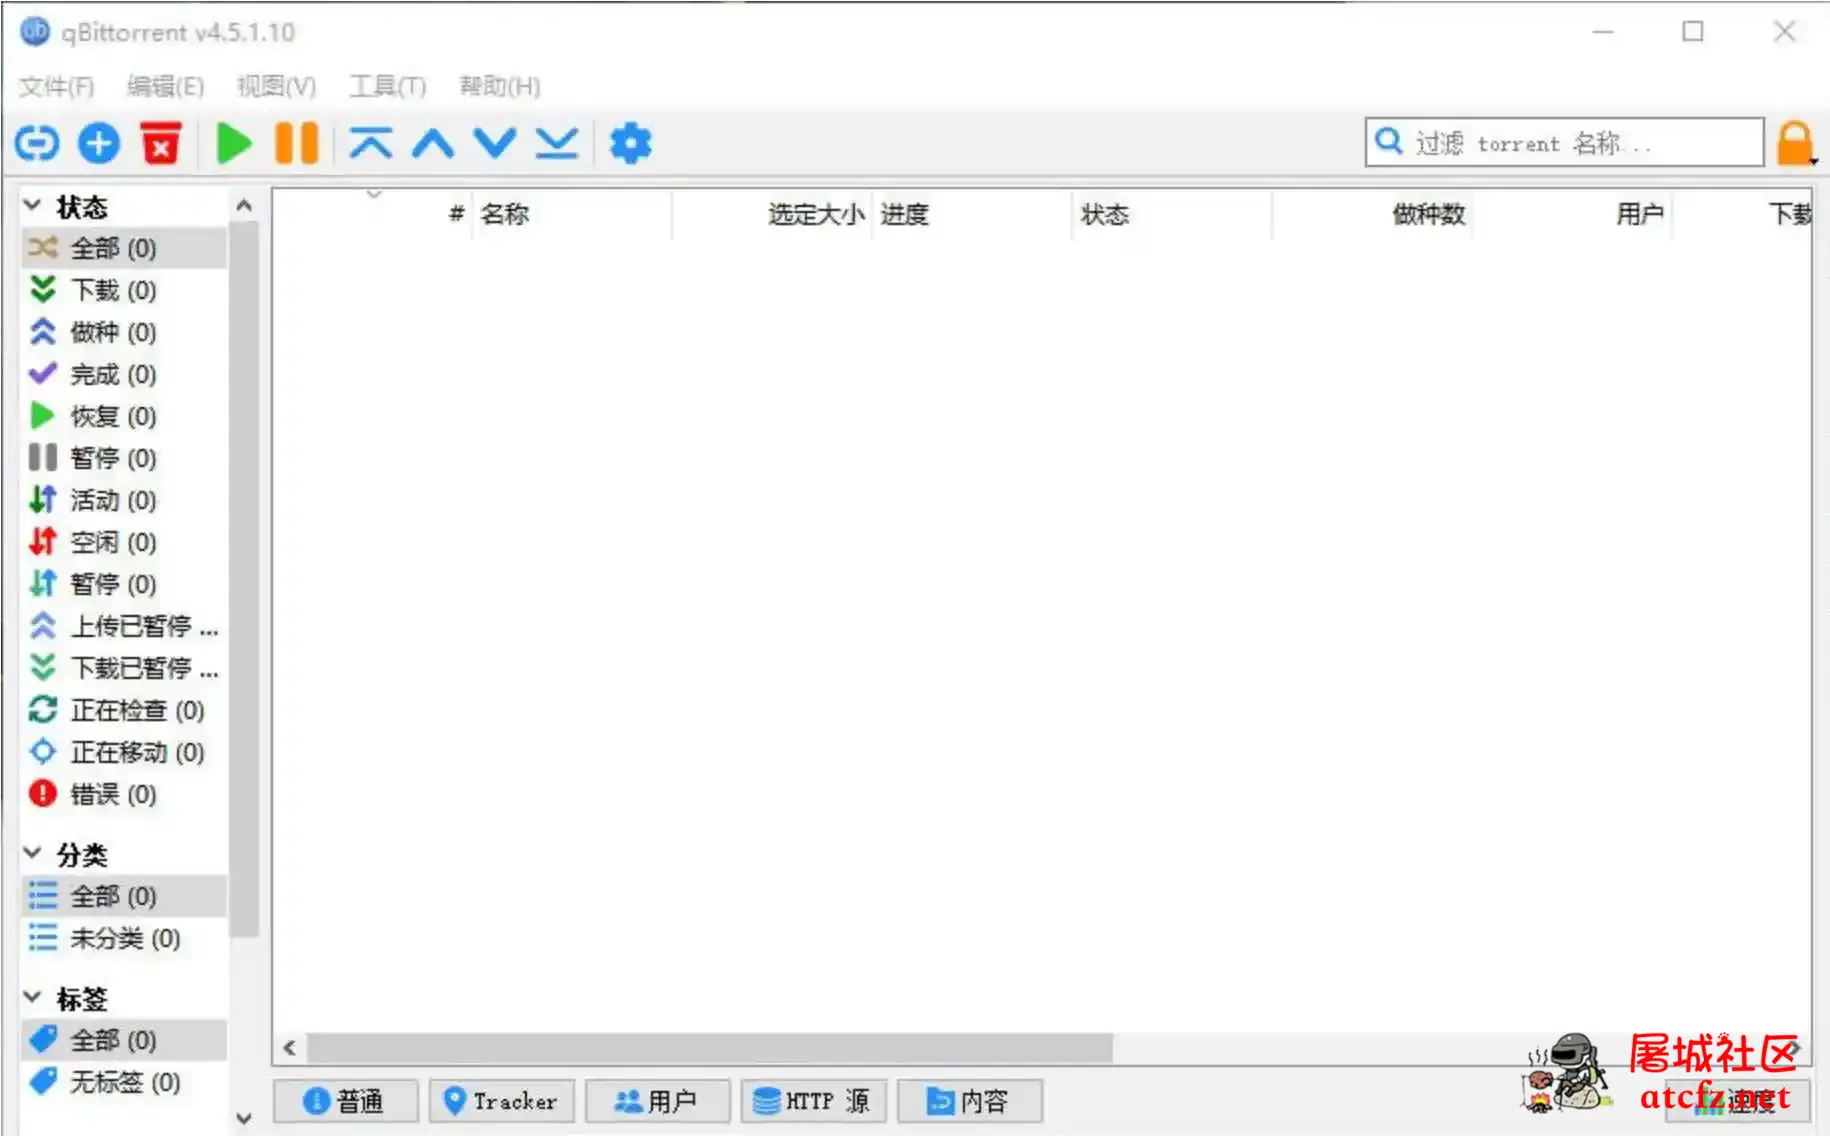 qBittorrent v4.5.3.10增强便携版BT种子下载工具 屠城辅助网www.tcfz1.com4718